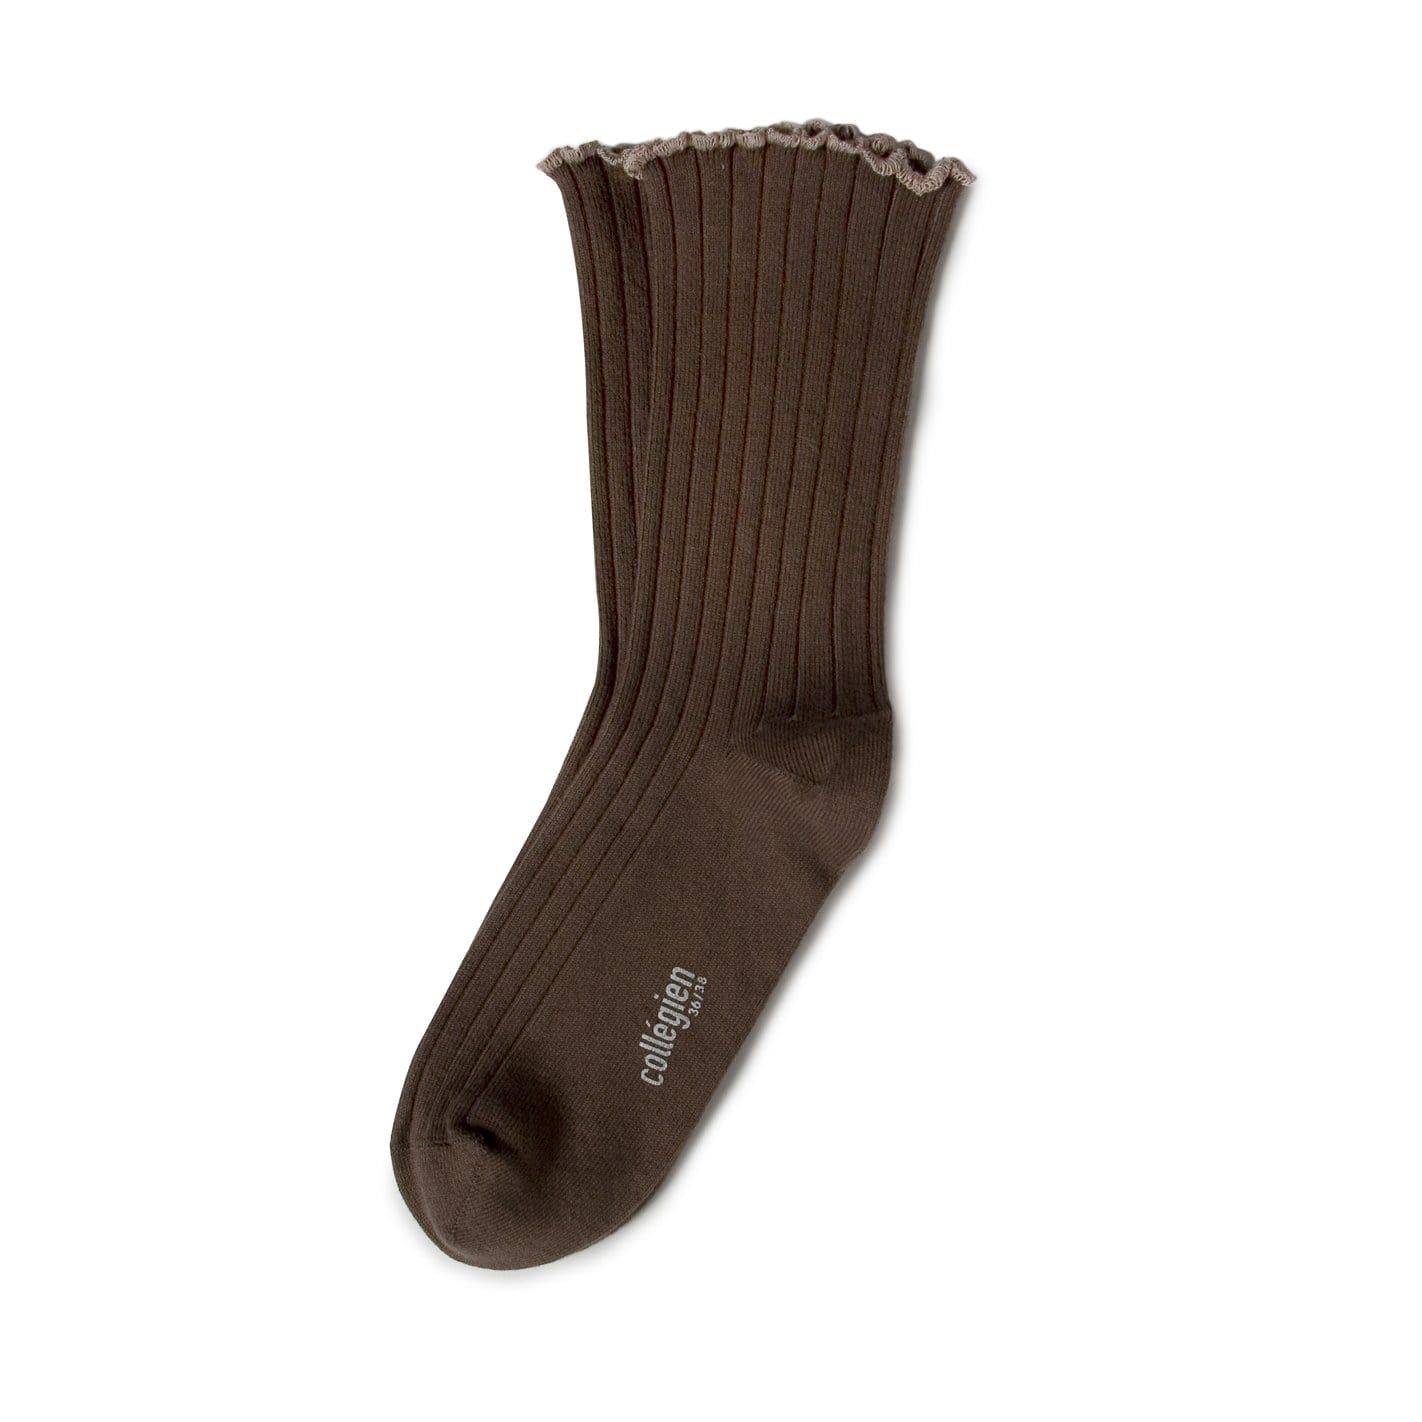 Collegien Socks Delphine Lettuce Trimmed Ribbed Socks - Chocolate